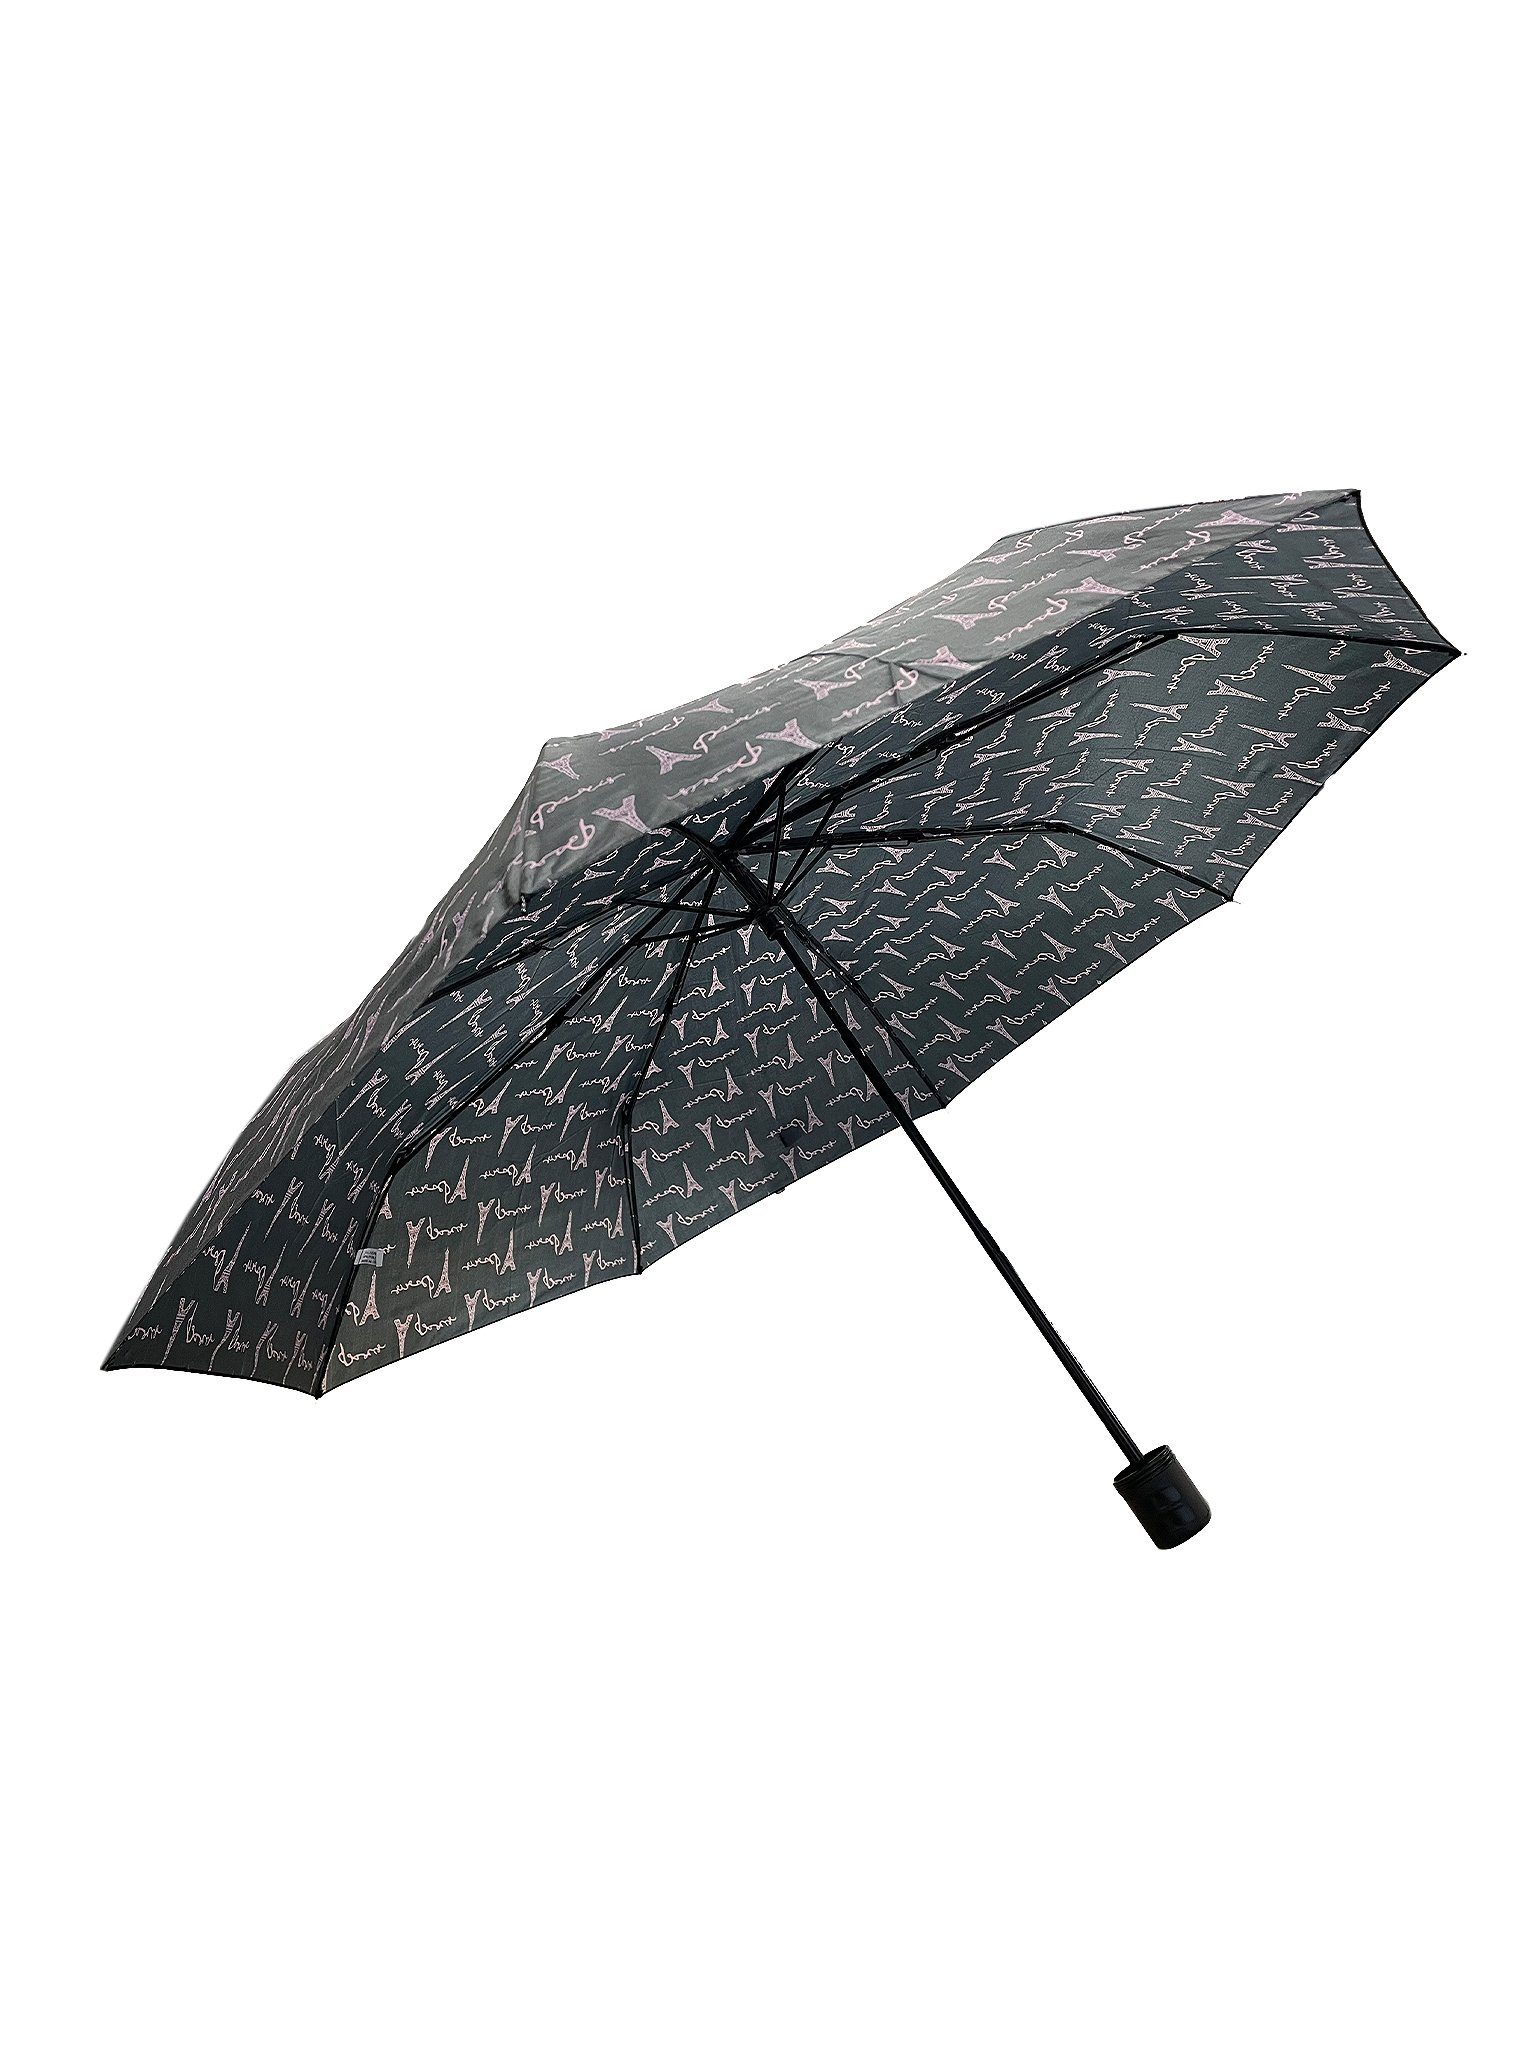 ANELY Taschenregenschirm Kleiner Regenschirm Paris Gemustert Taschenschirm, 6746 in Schwarz-Lila | Taschenschirme